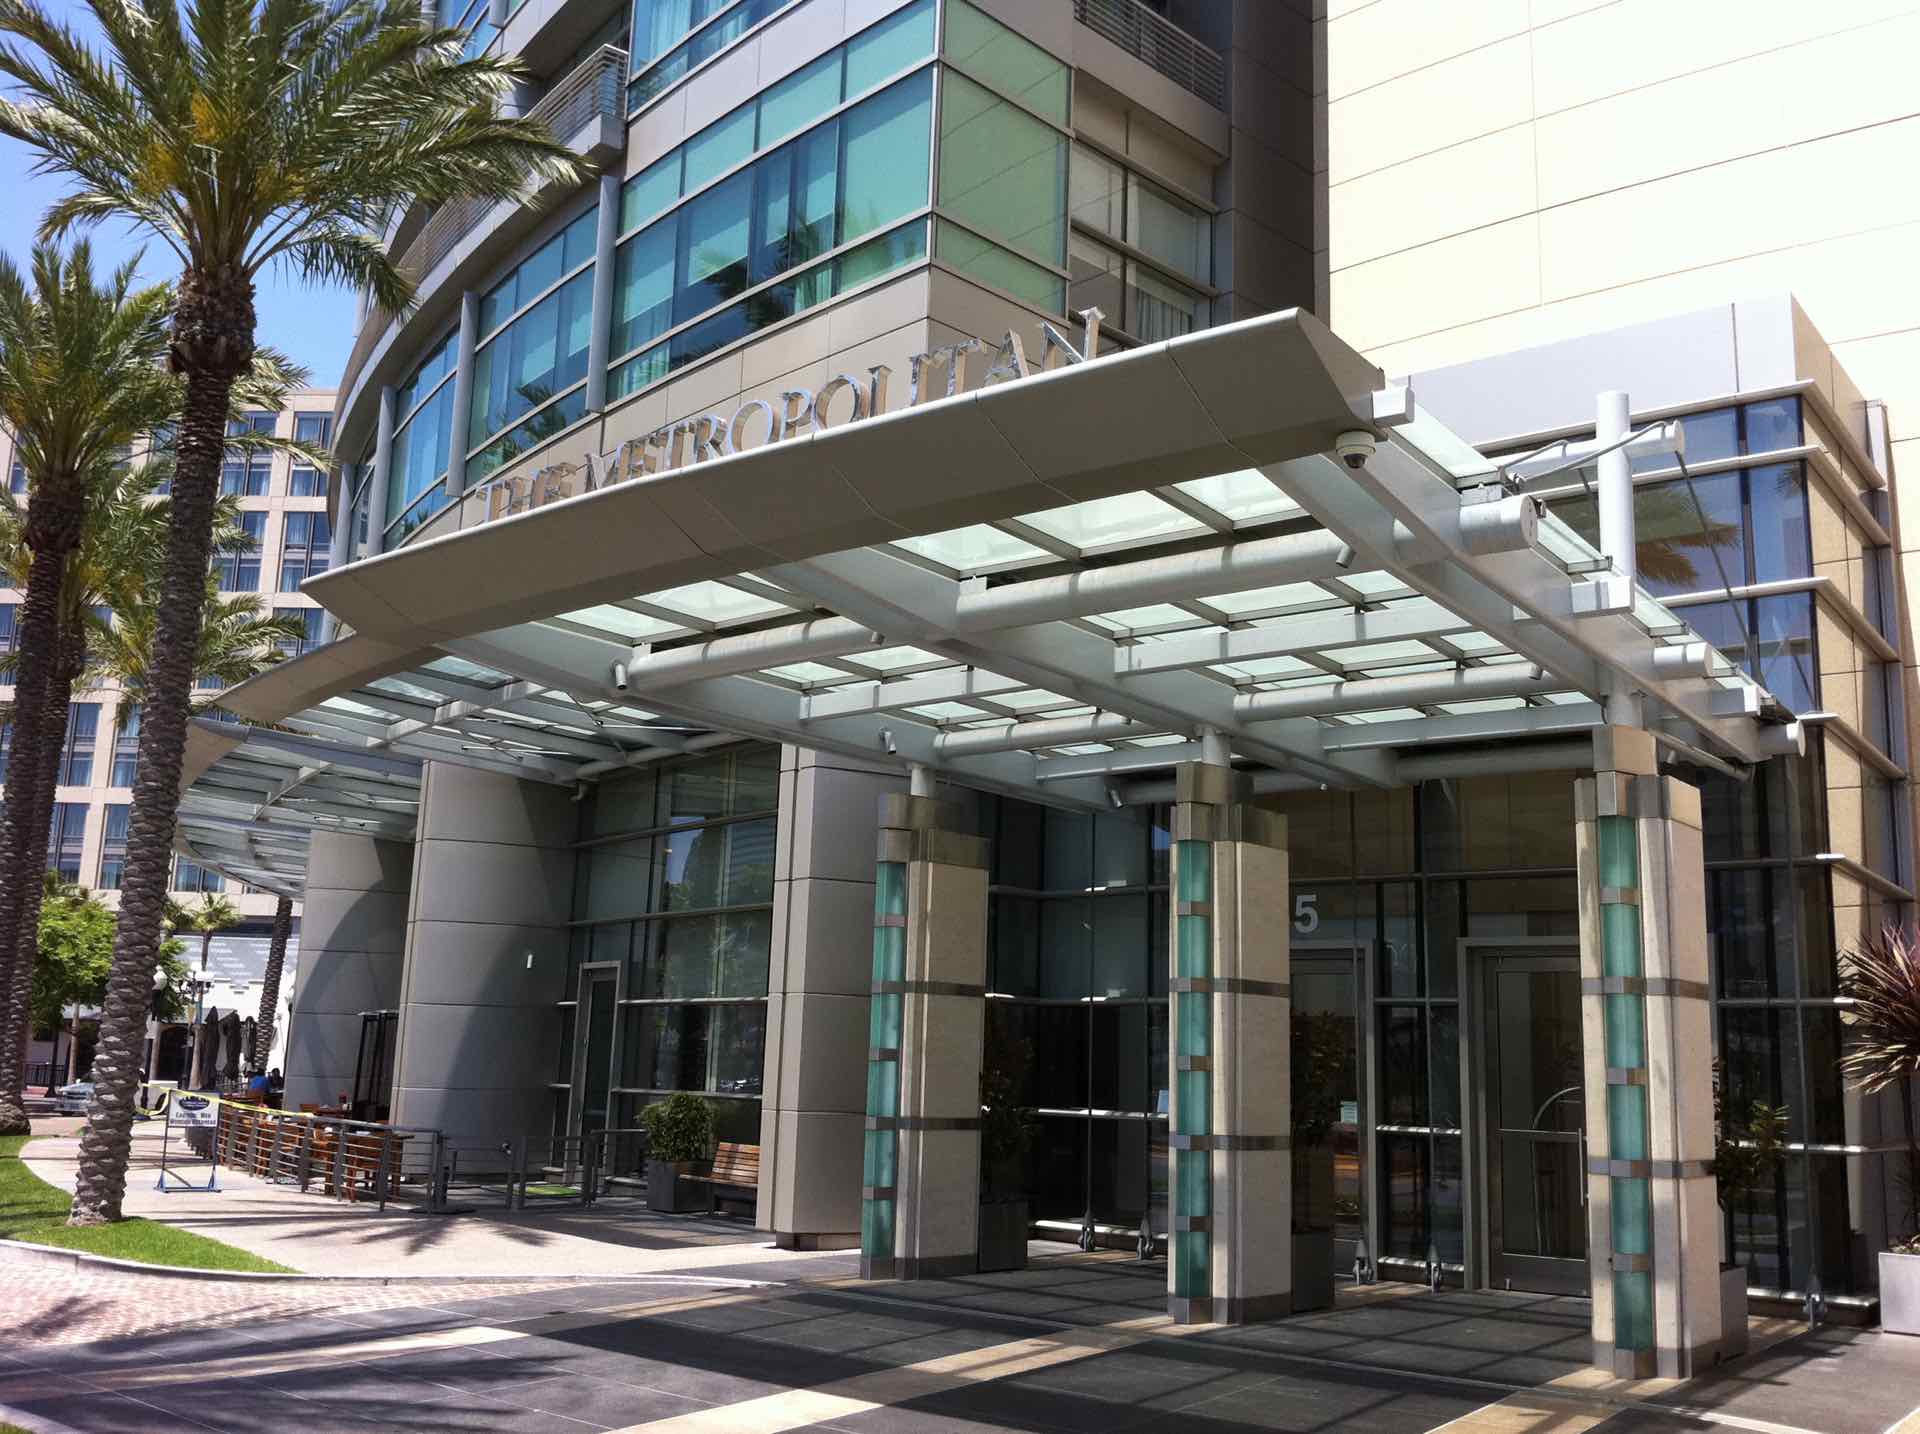 Entrance to The Metropolitan luxury condos in San Diego East Village